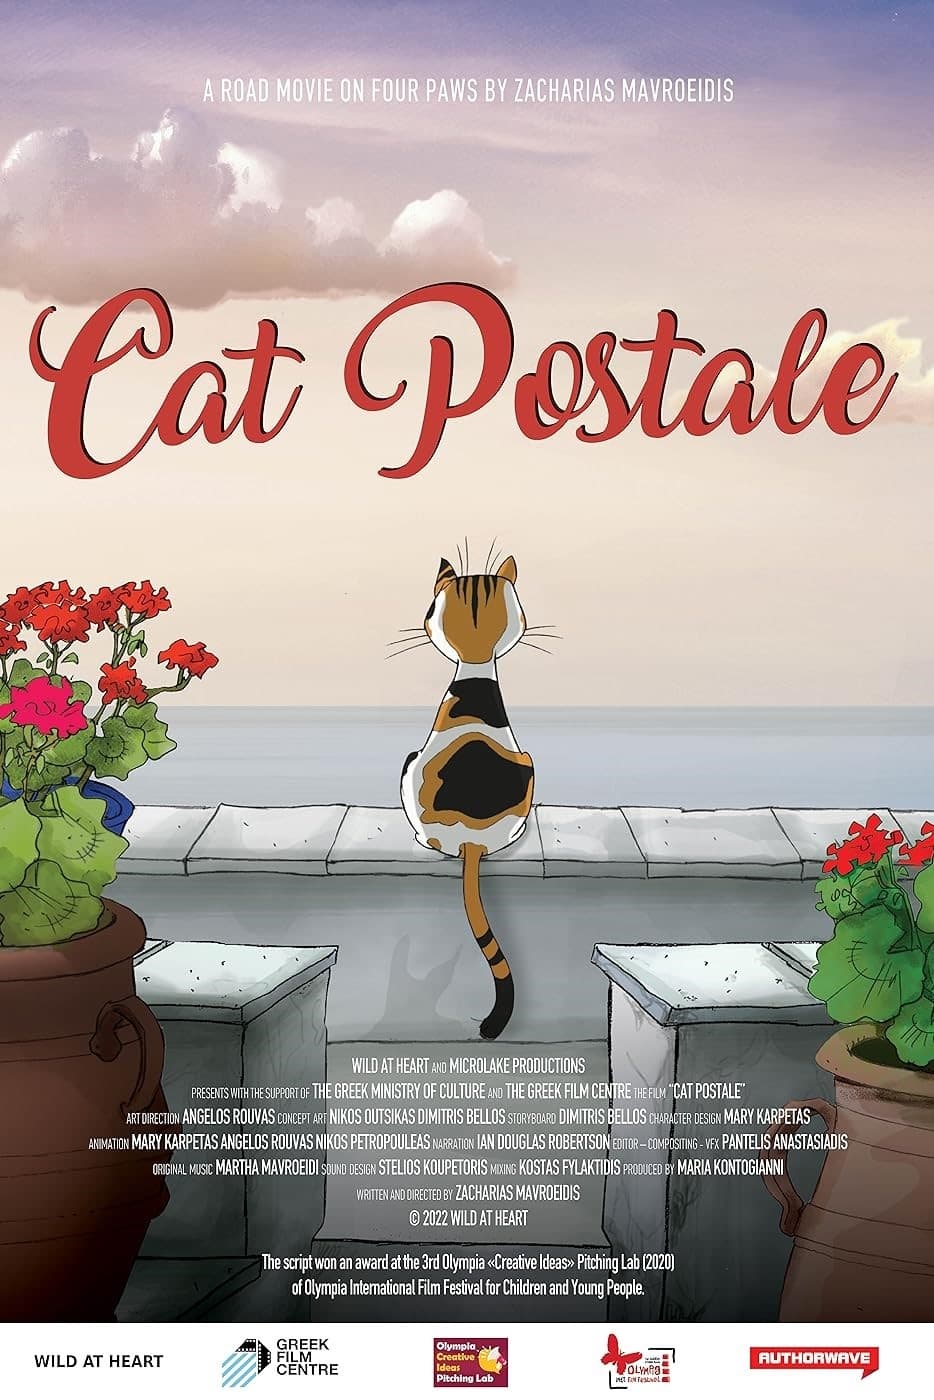 Cat Postale